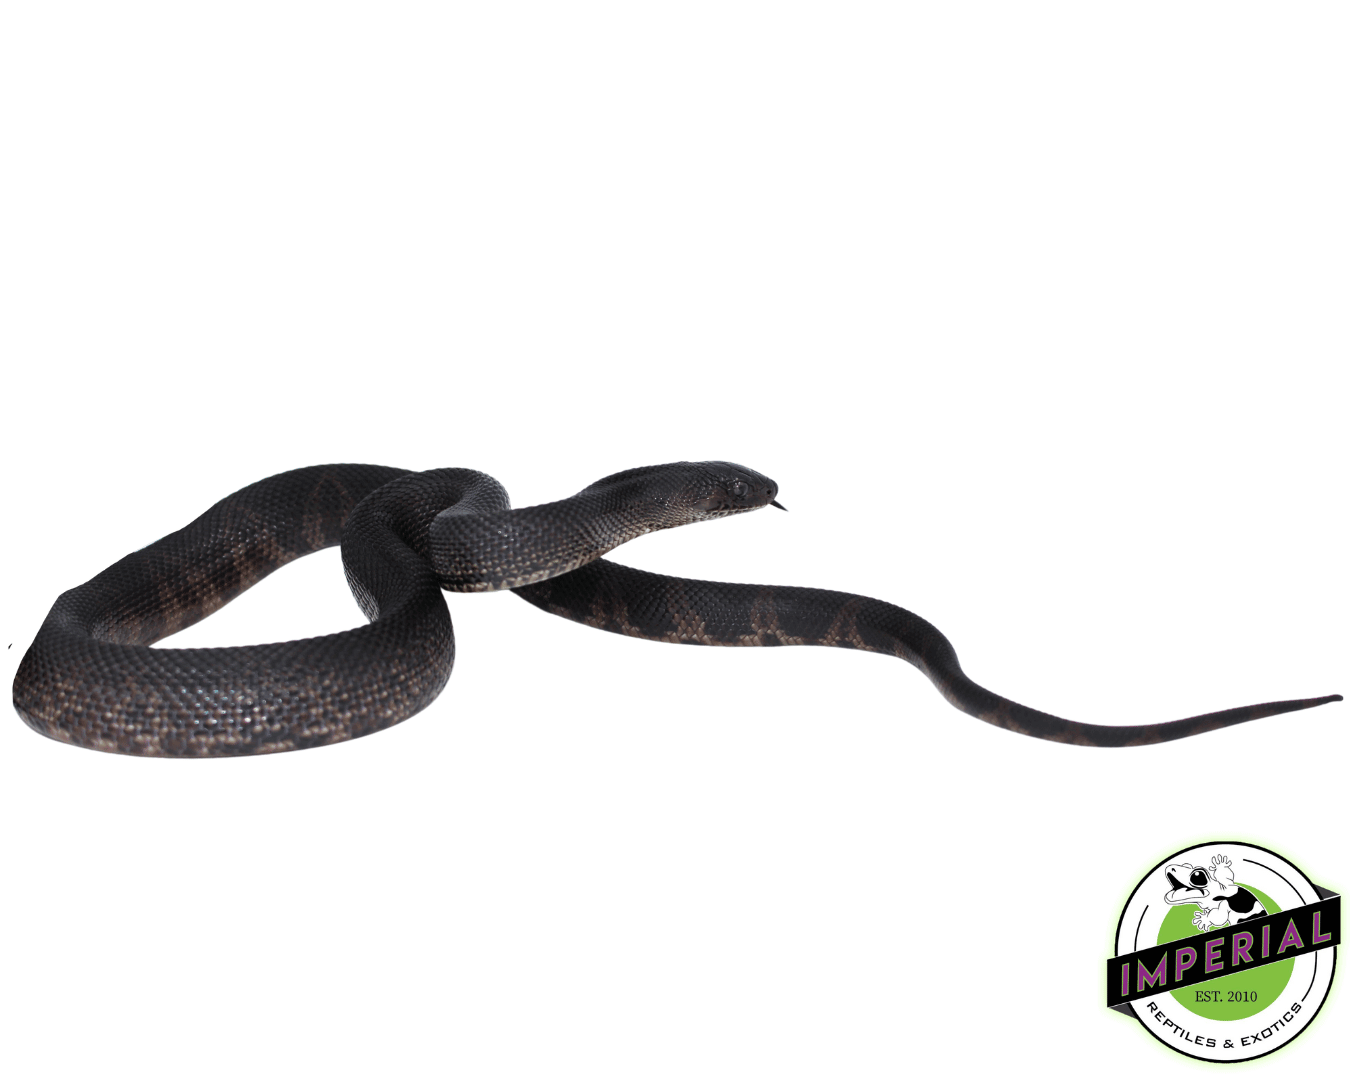 black pine snake for sale, buy reptiles online